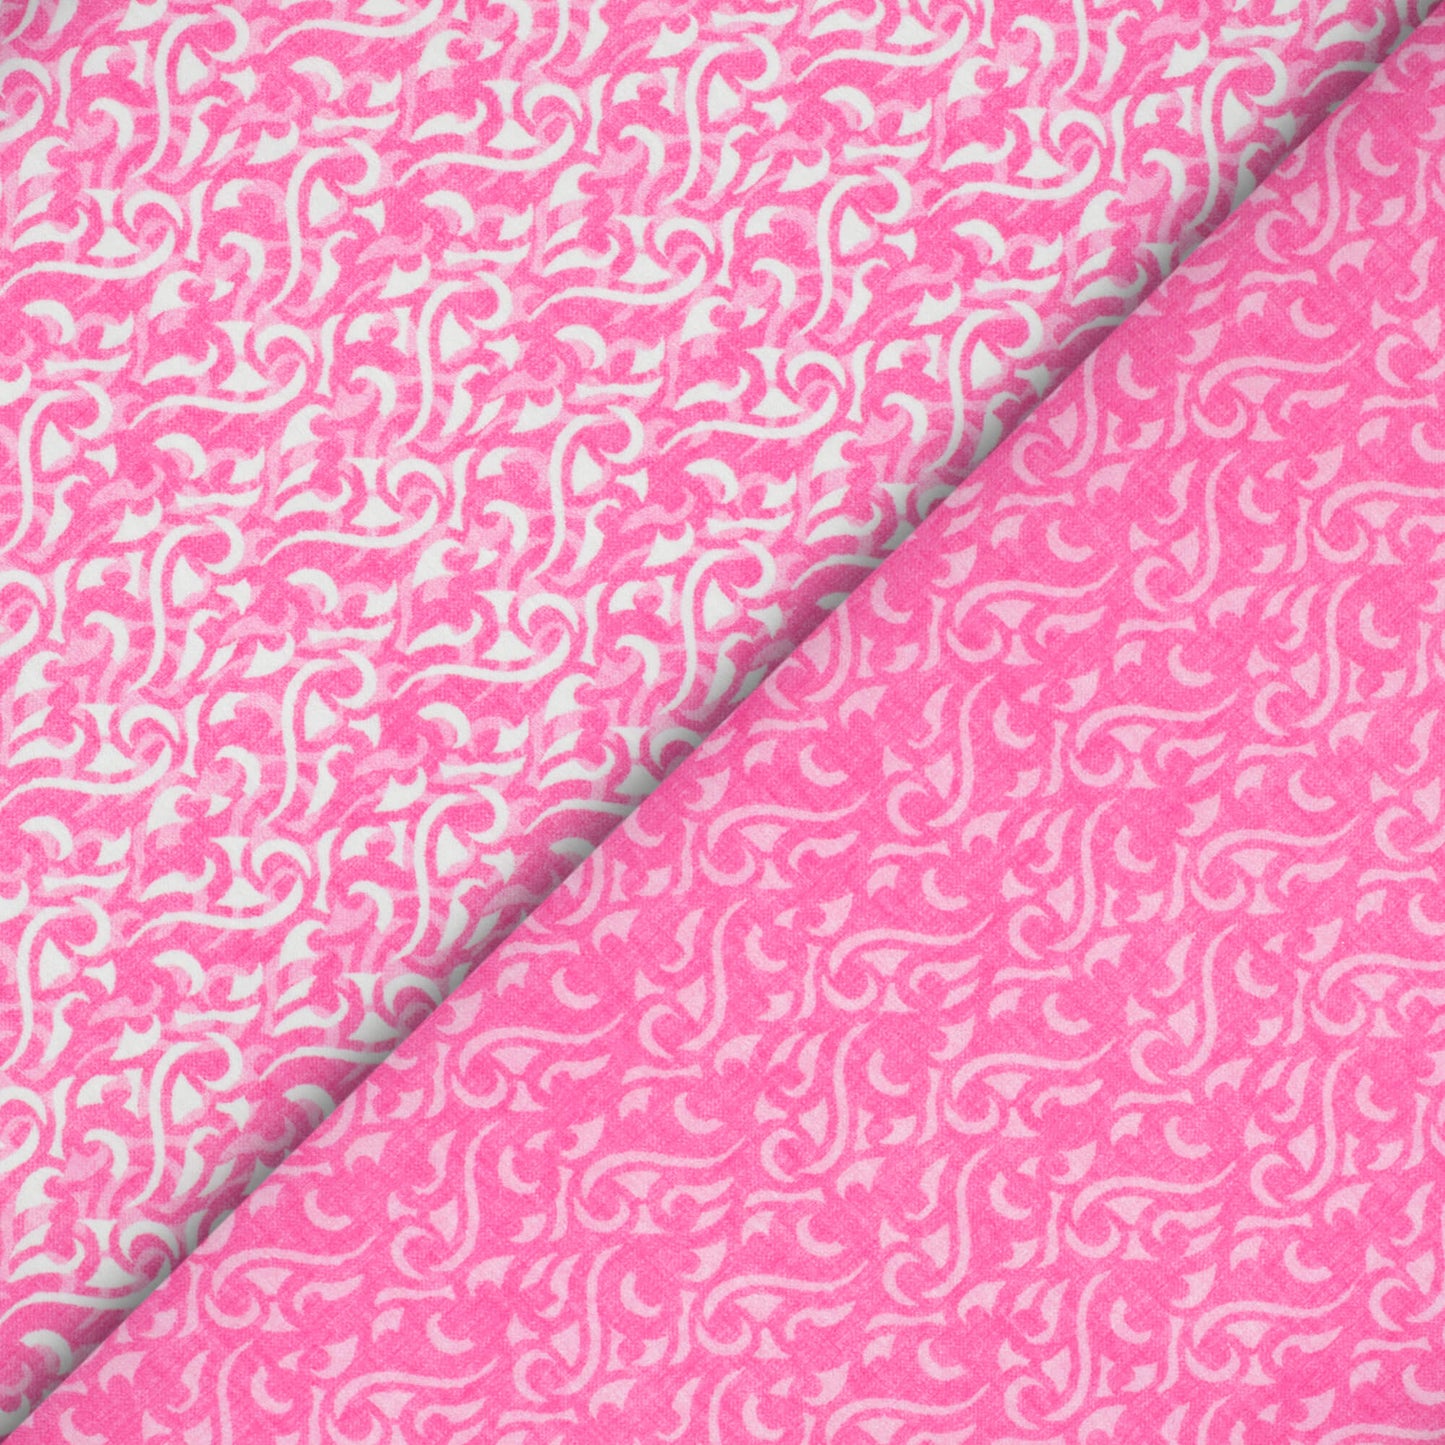 Taffy Pink And White Abstract Pattern Digital Print Lush Satin Fabric